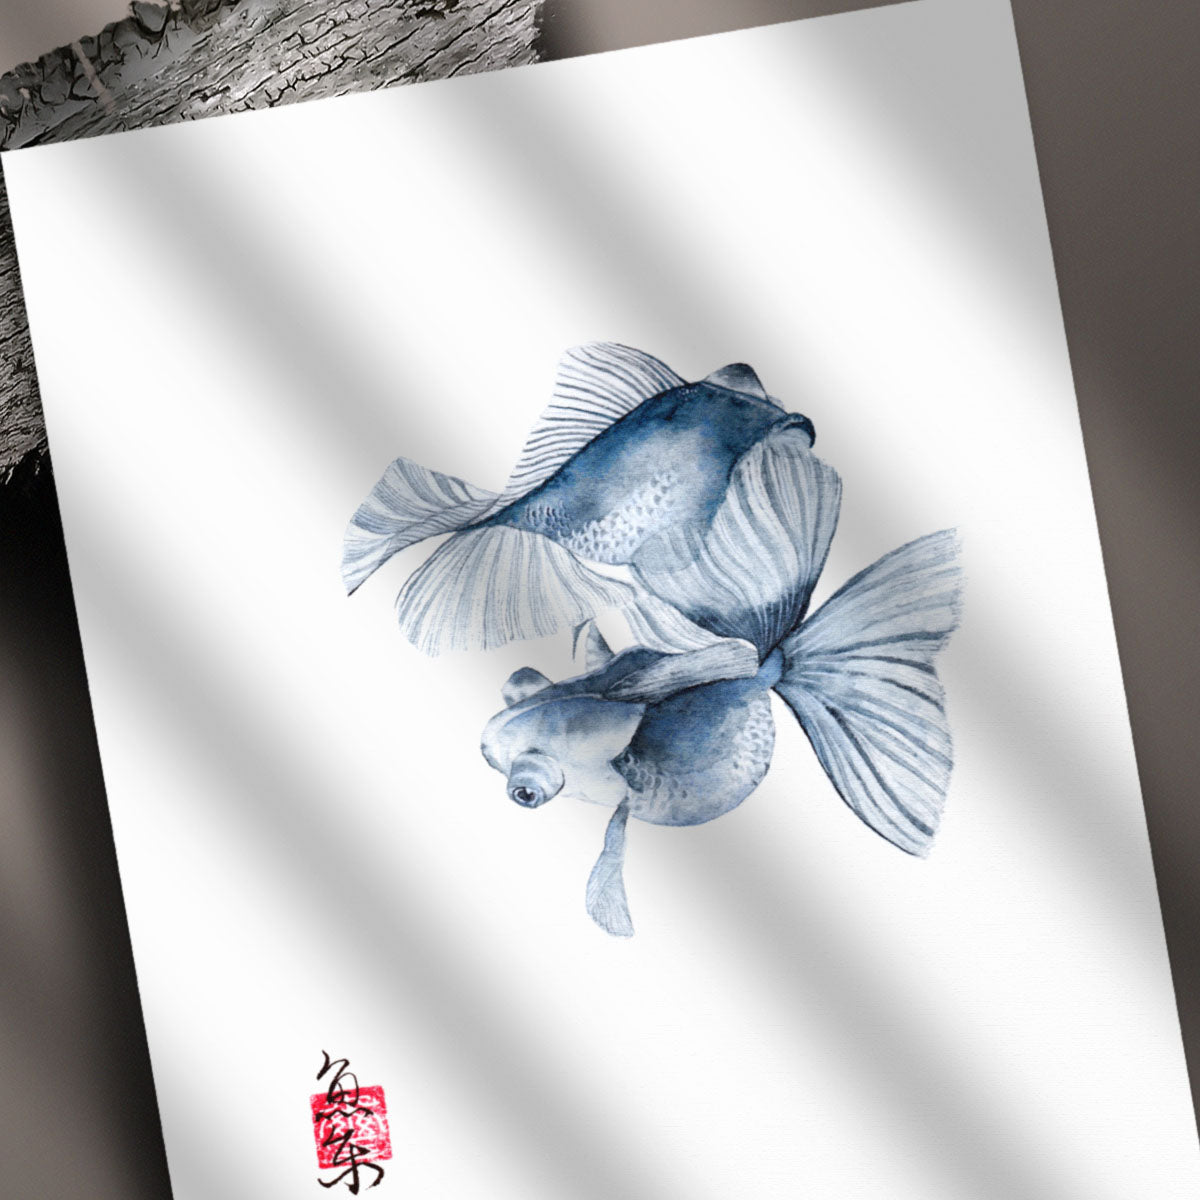 Chinese brush style painting of fish